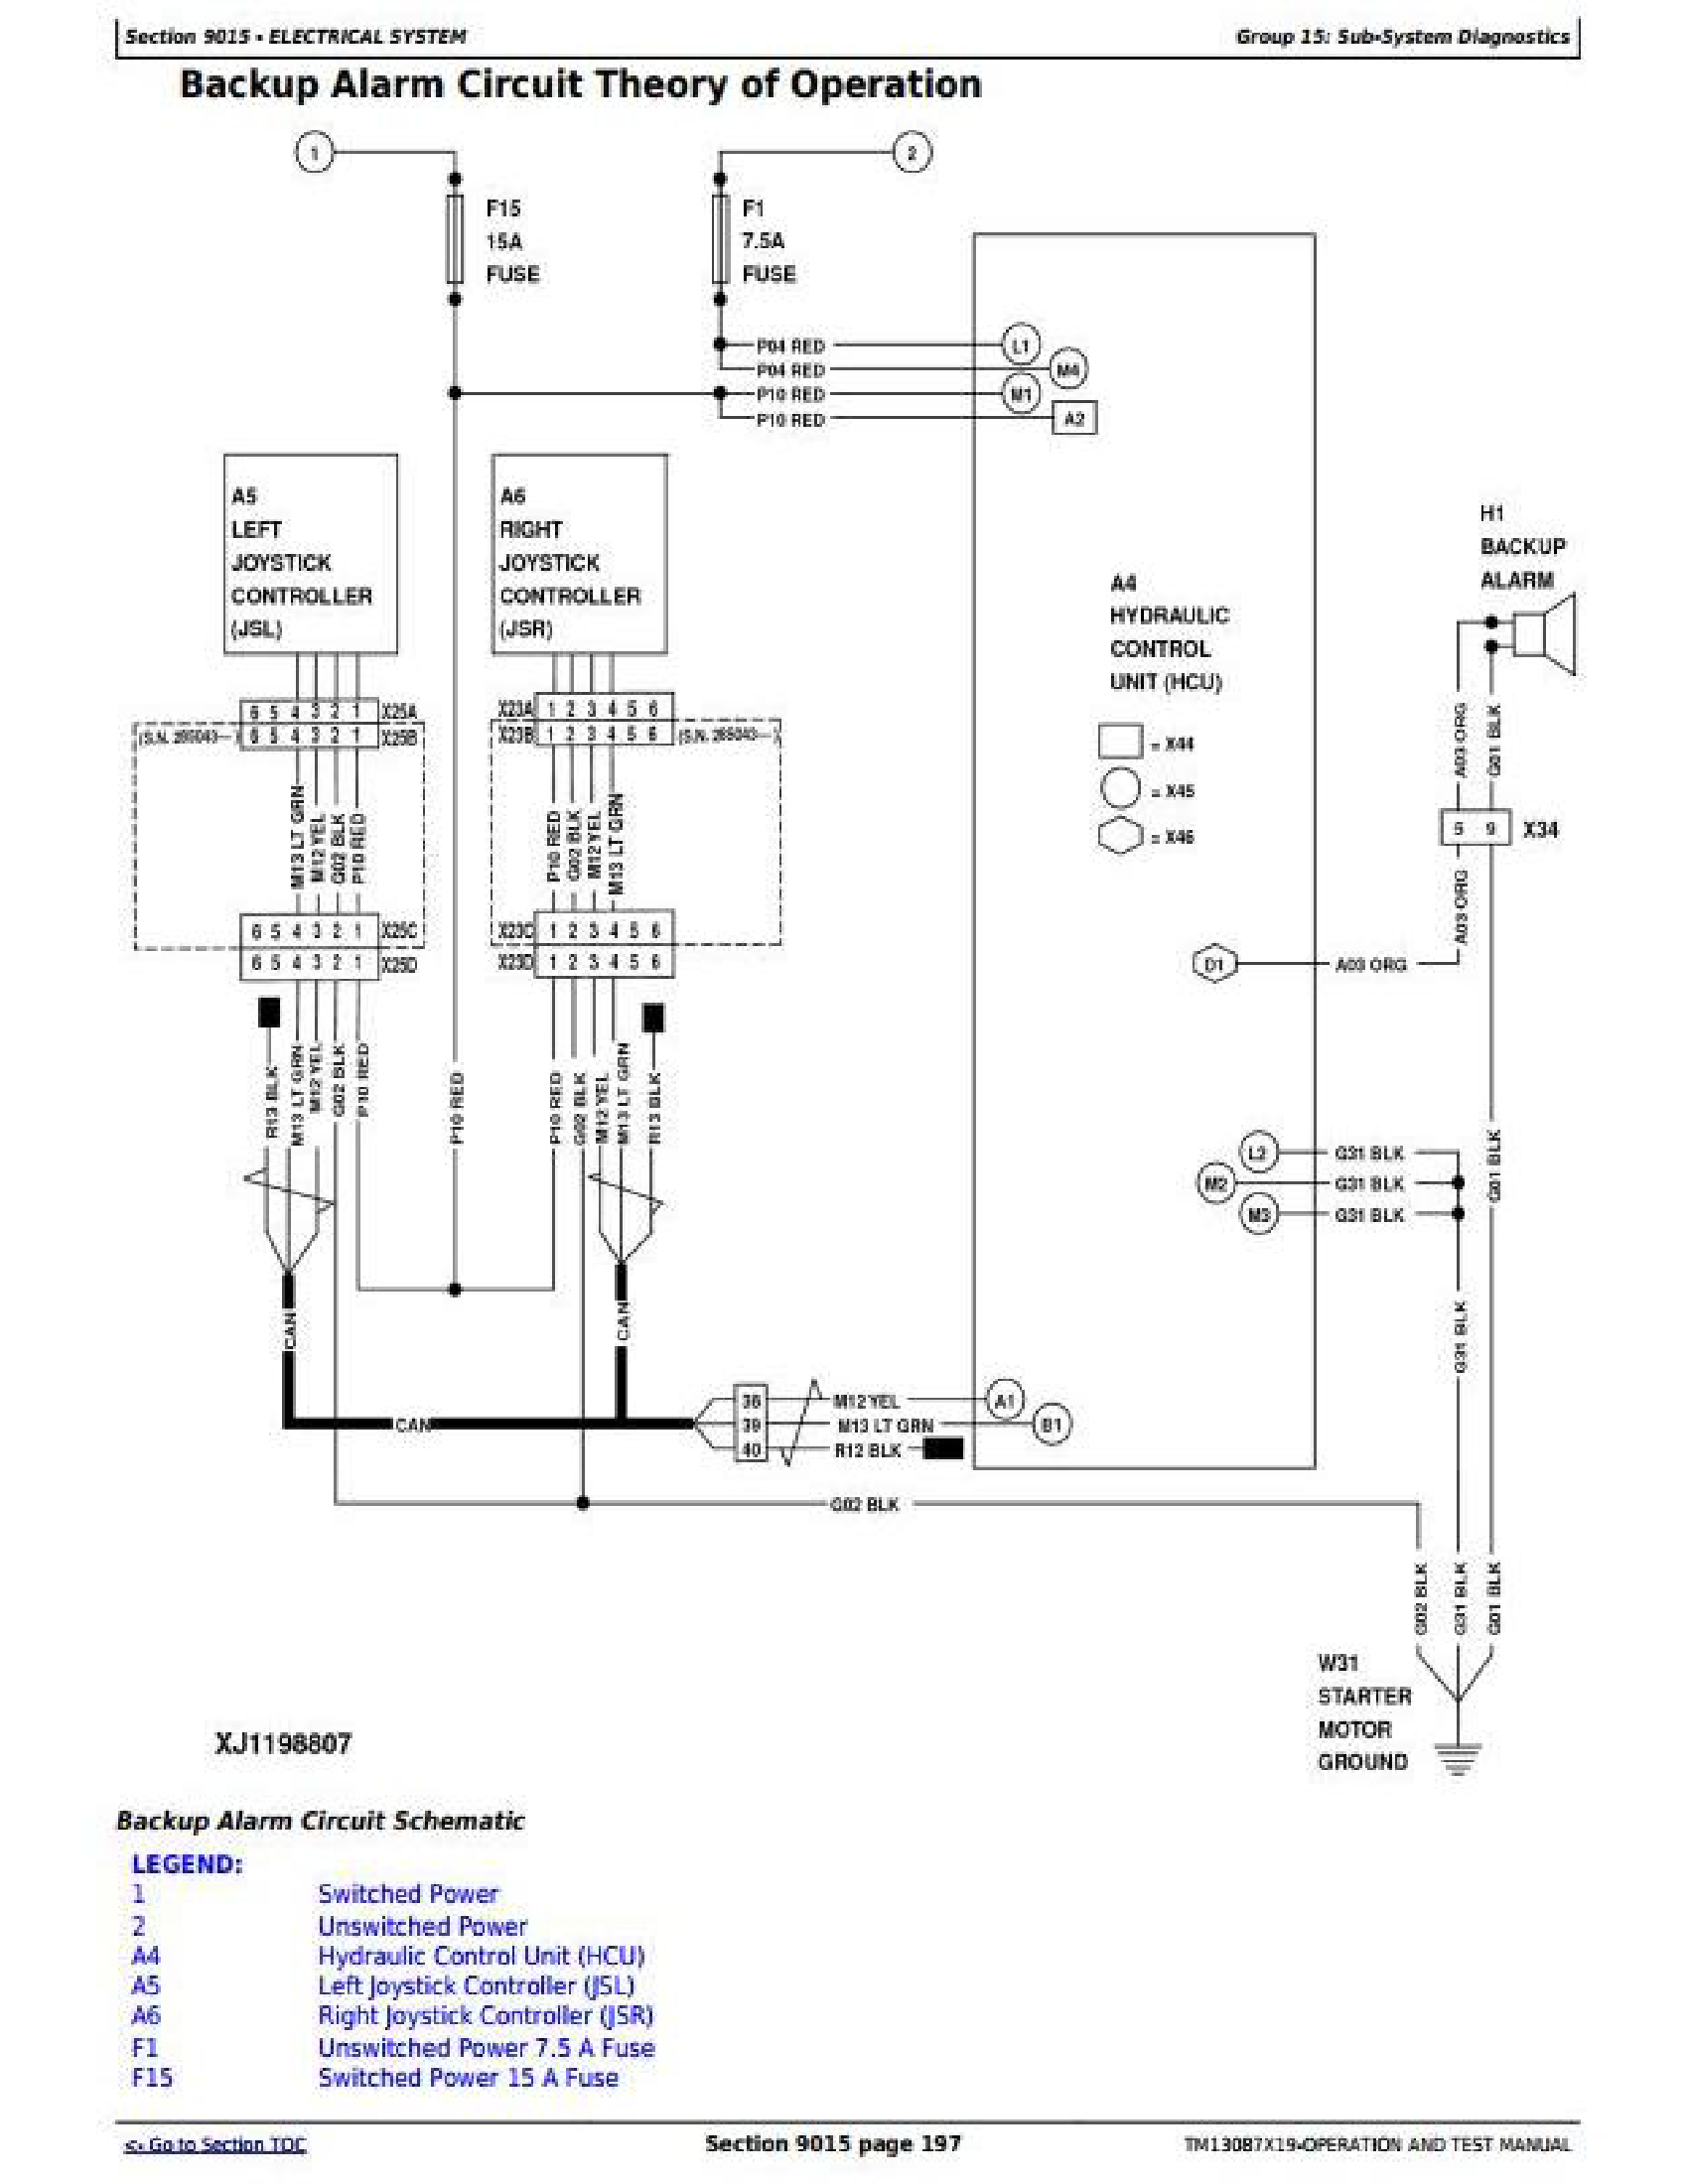 John Deere ;1FF290GXC705001- manual pdf